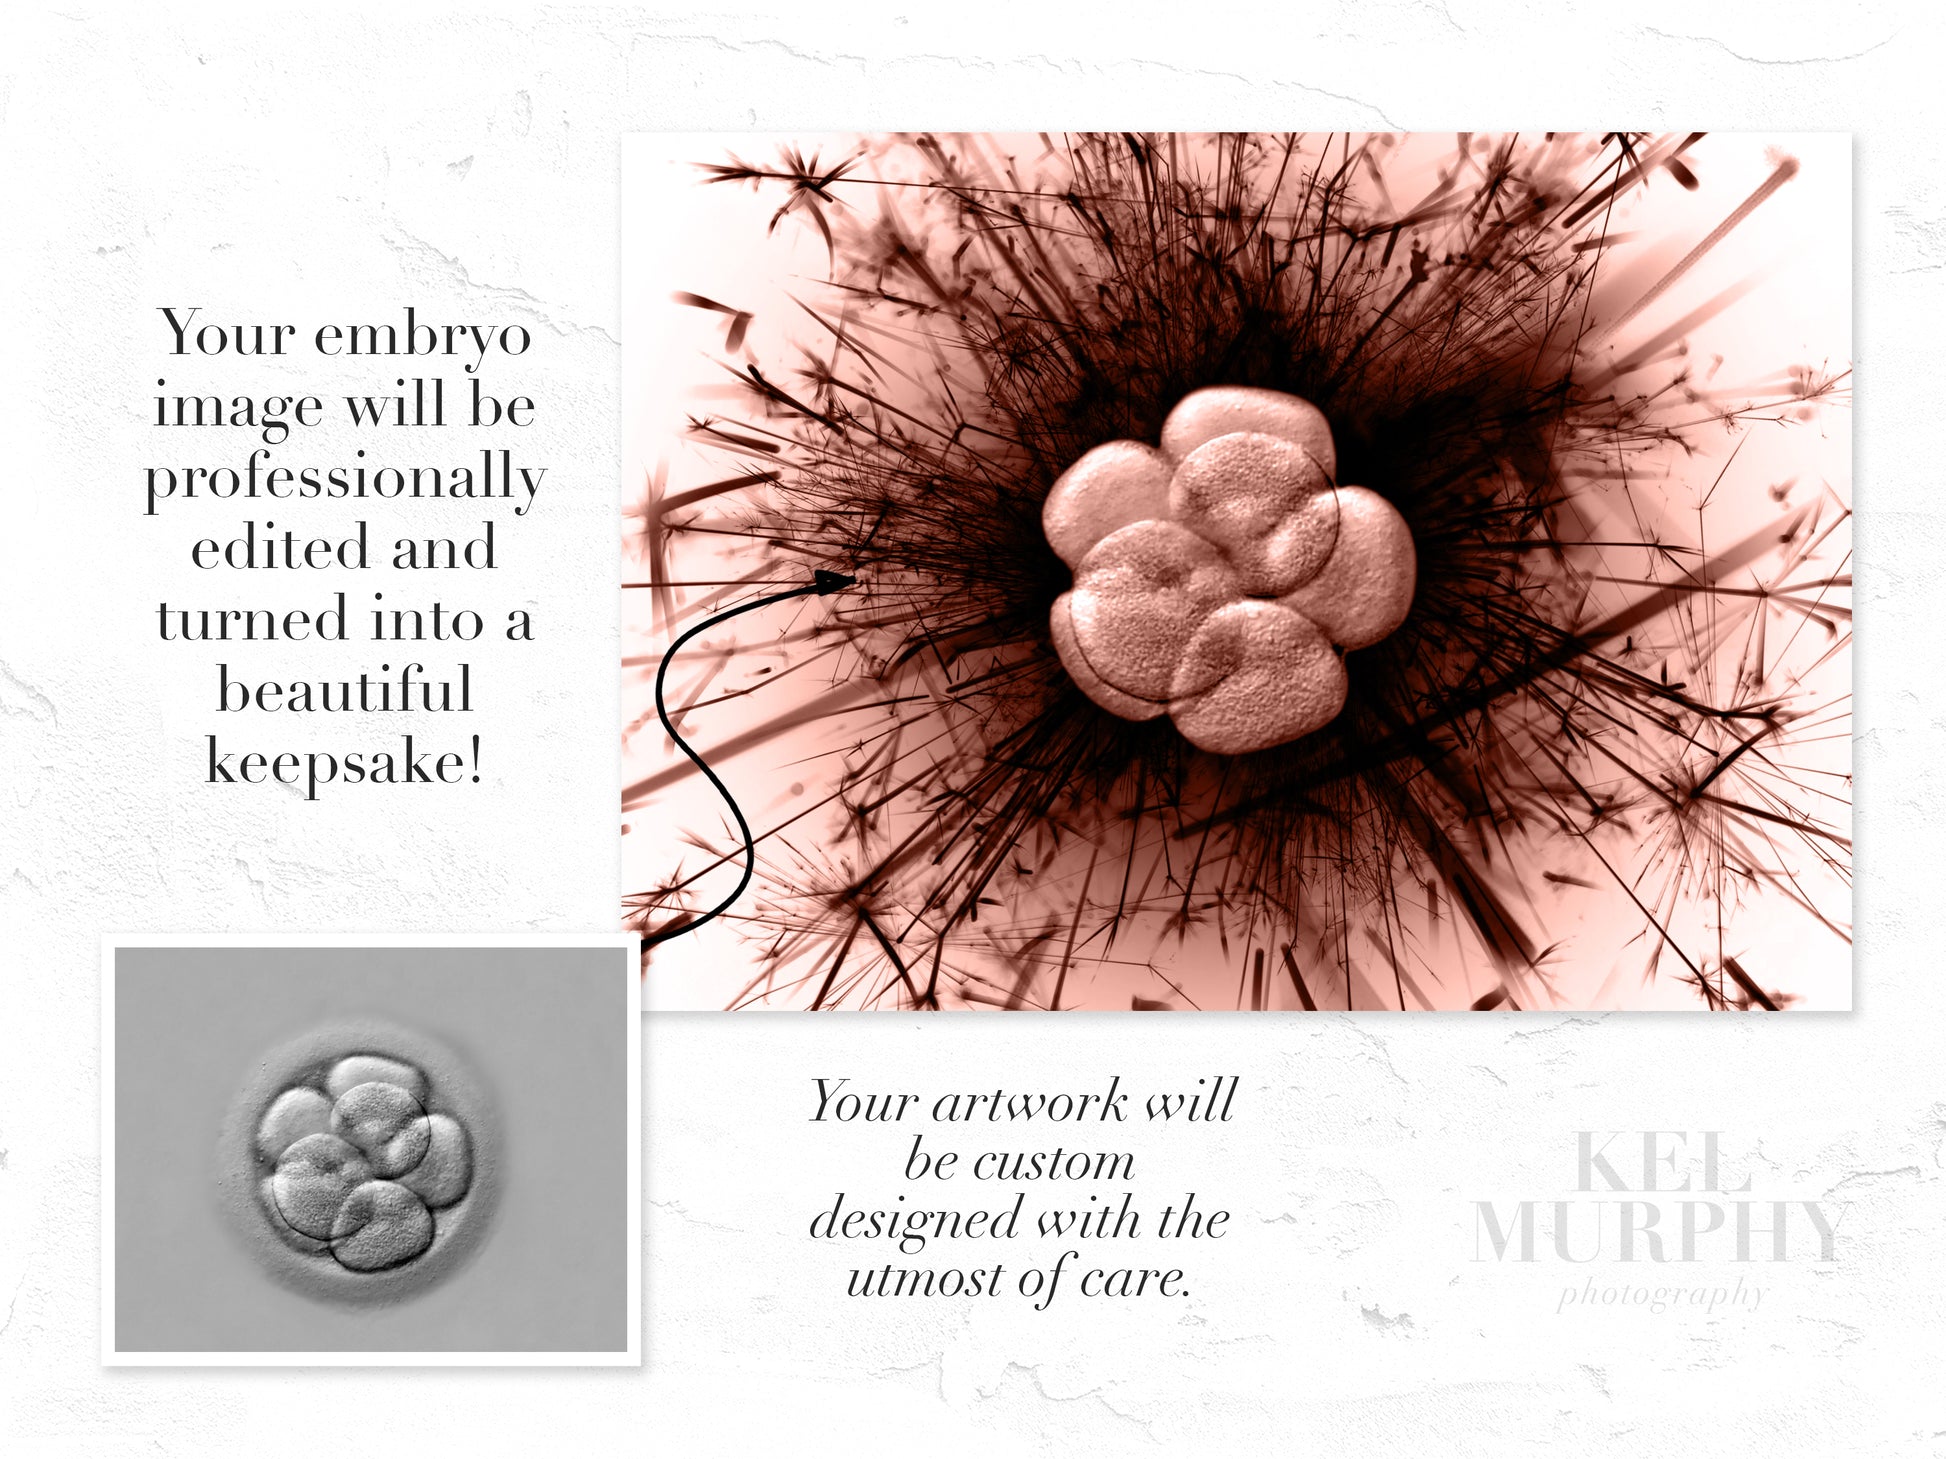 Dandelion wish IVF fertility embryo art print custom before and after